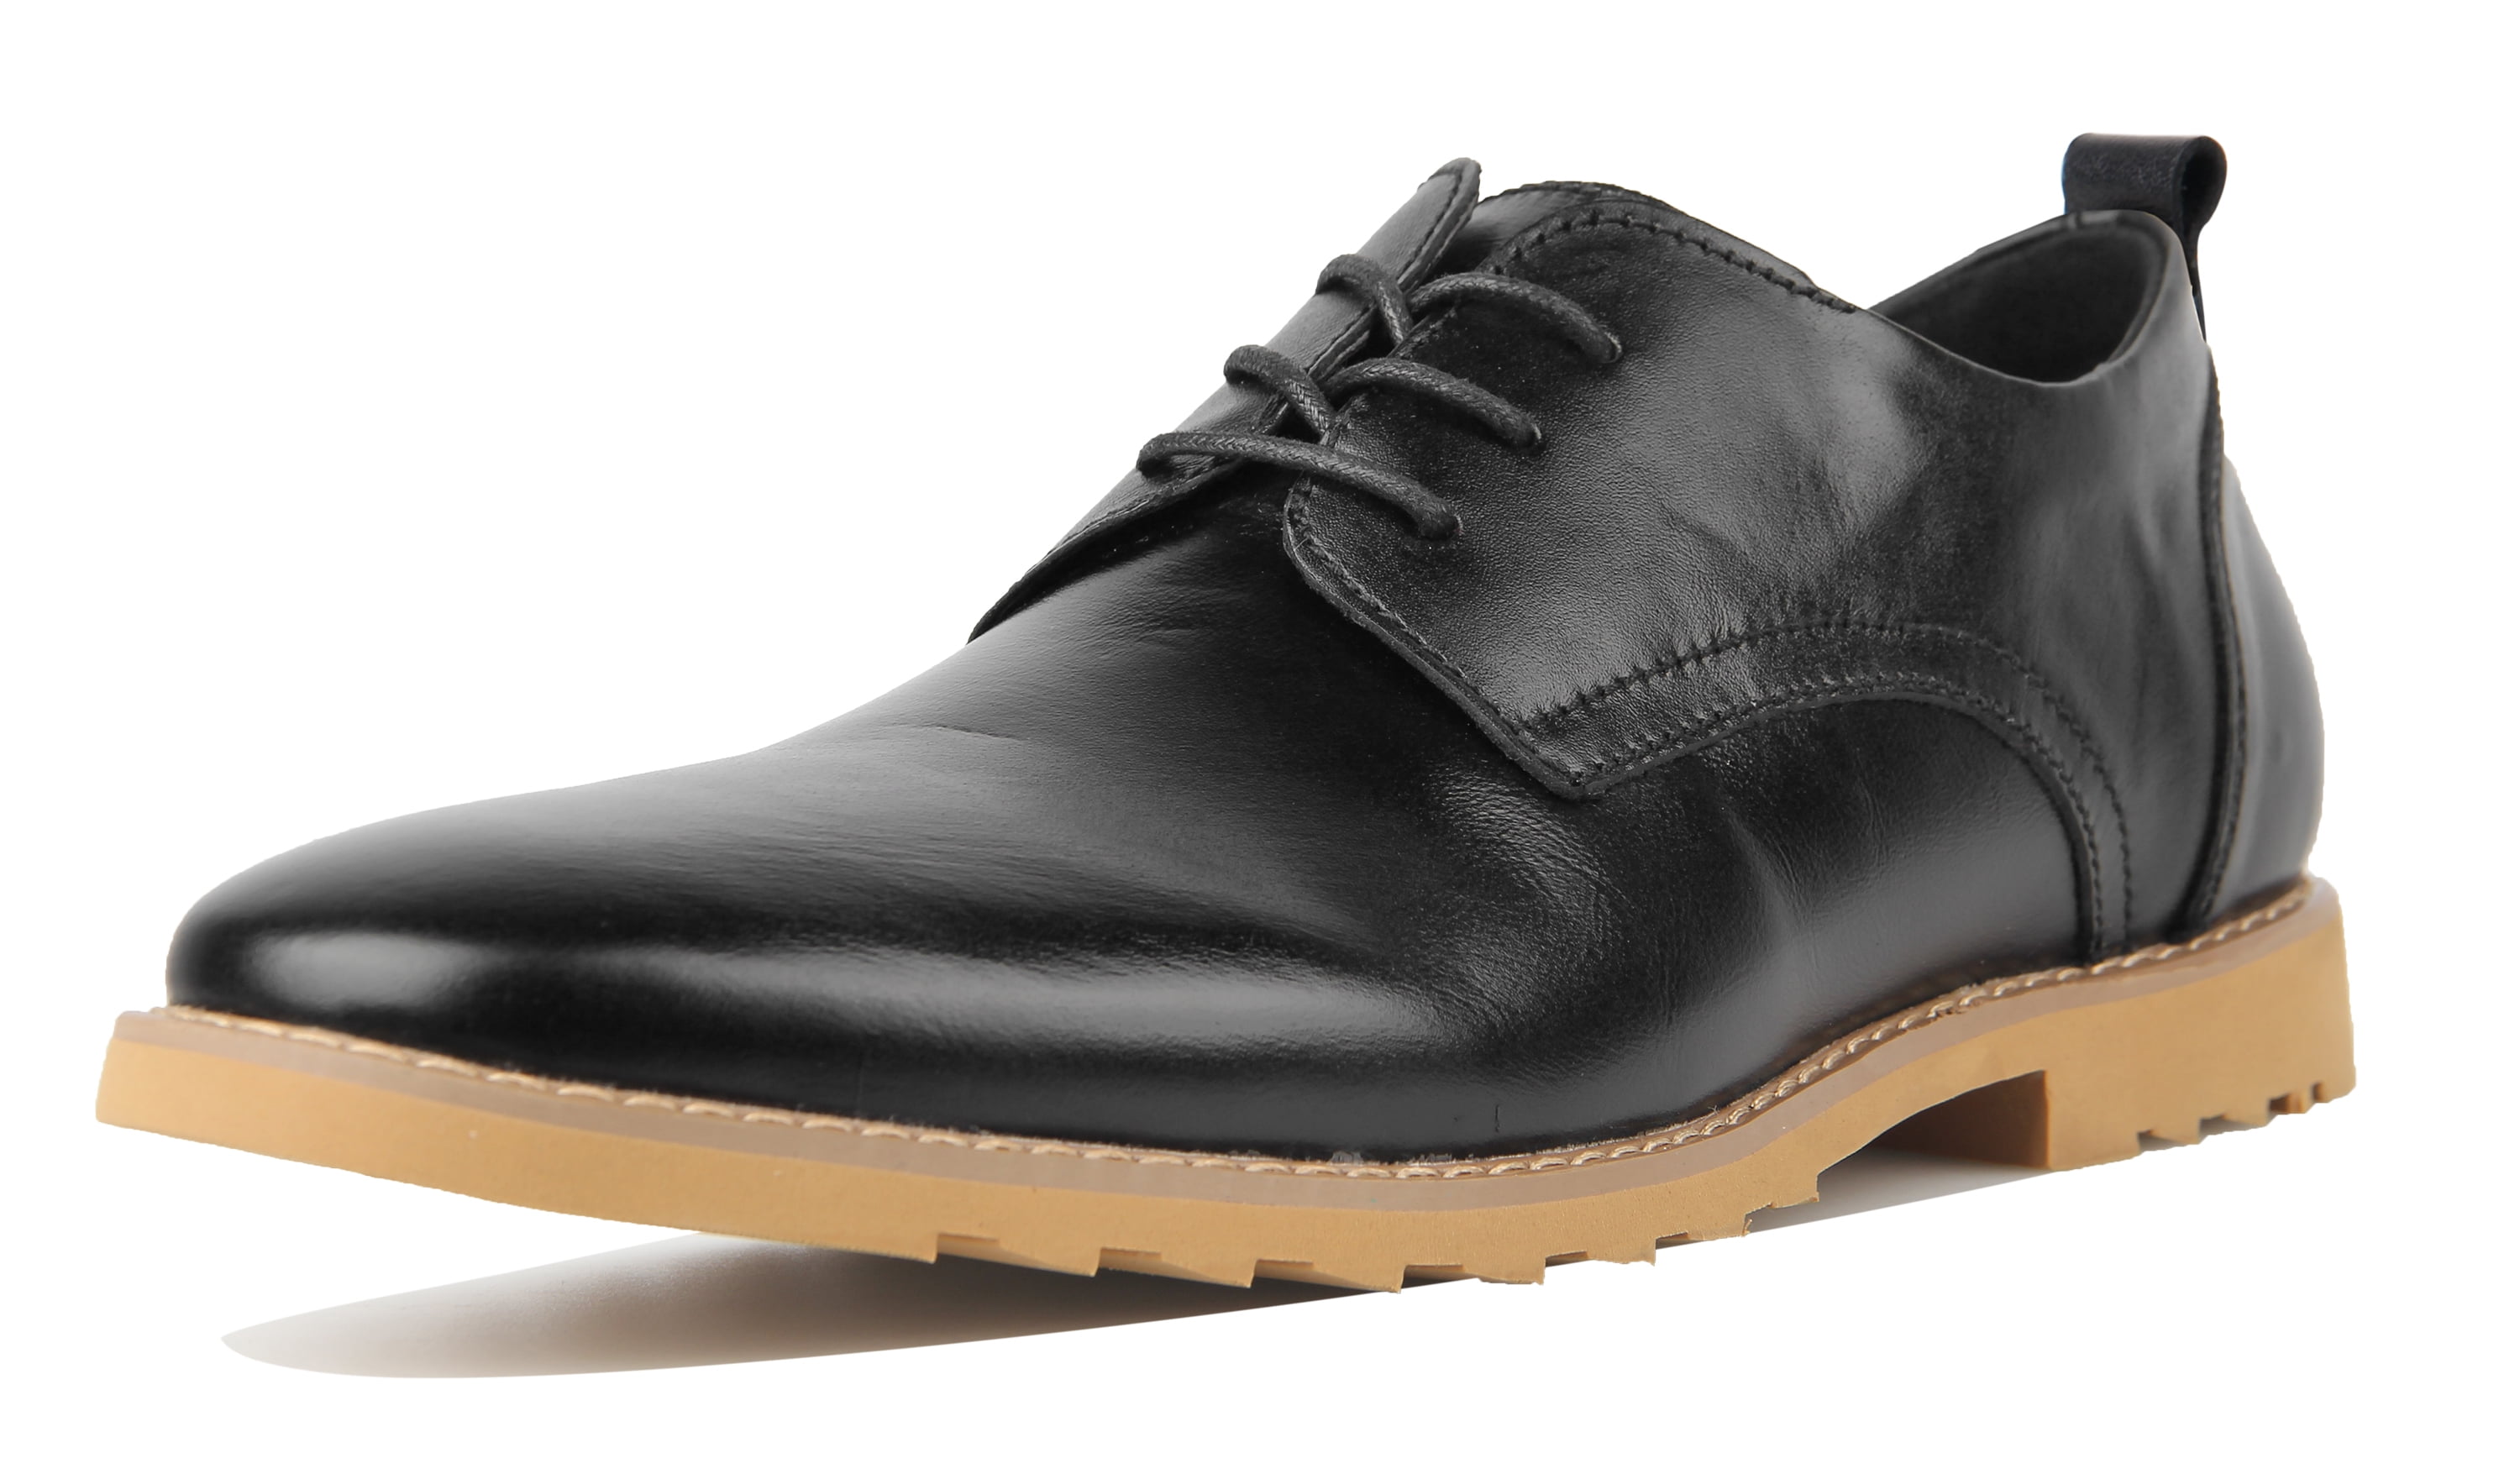 black slip resistant dress shoes